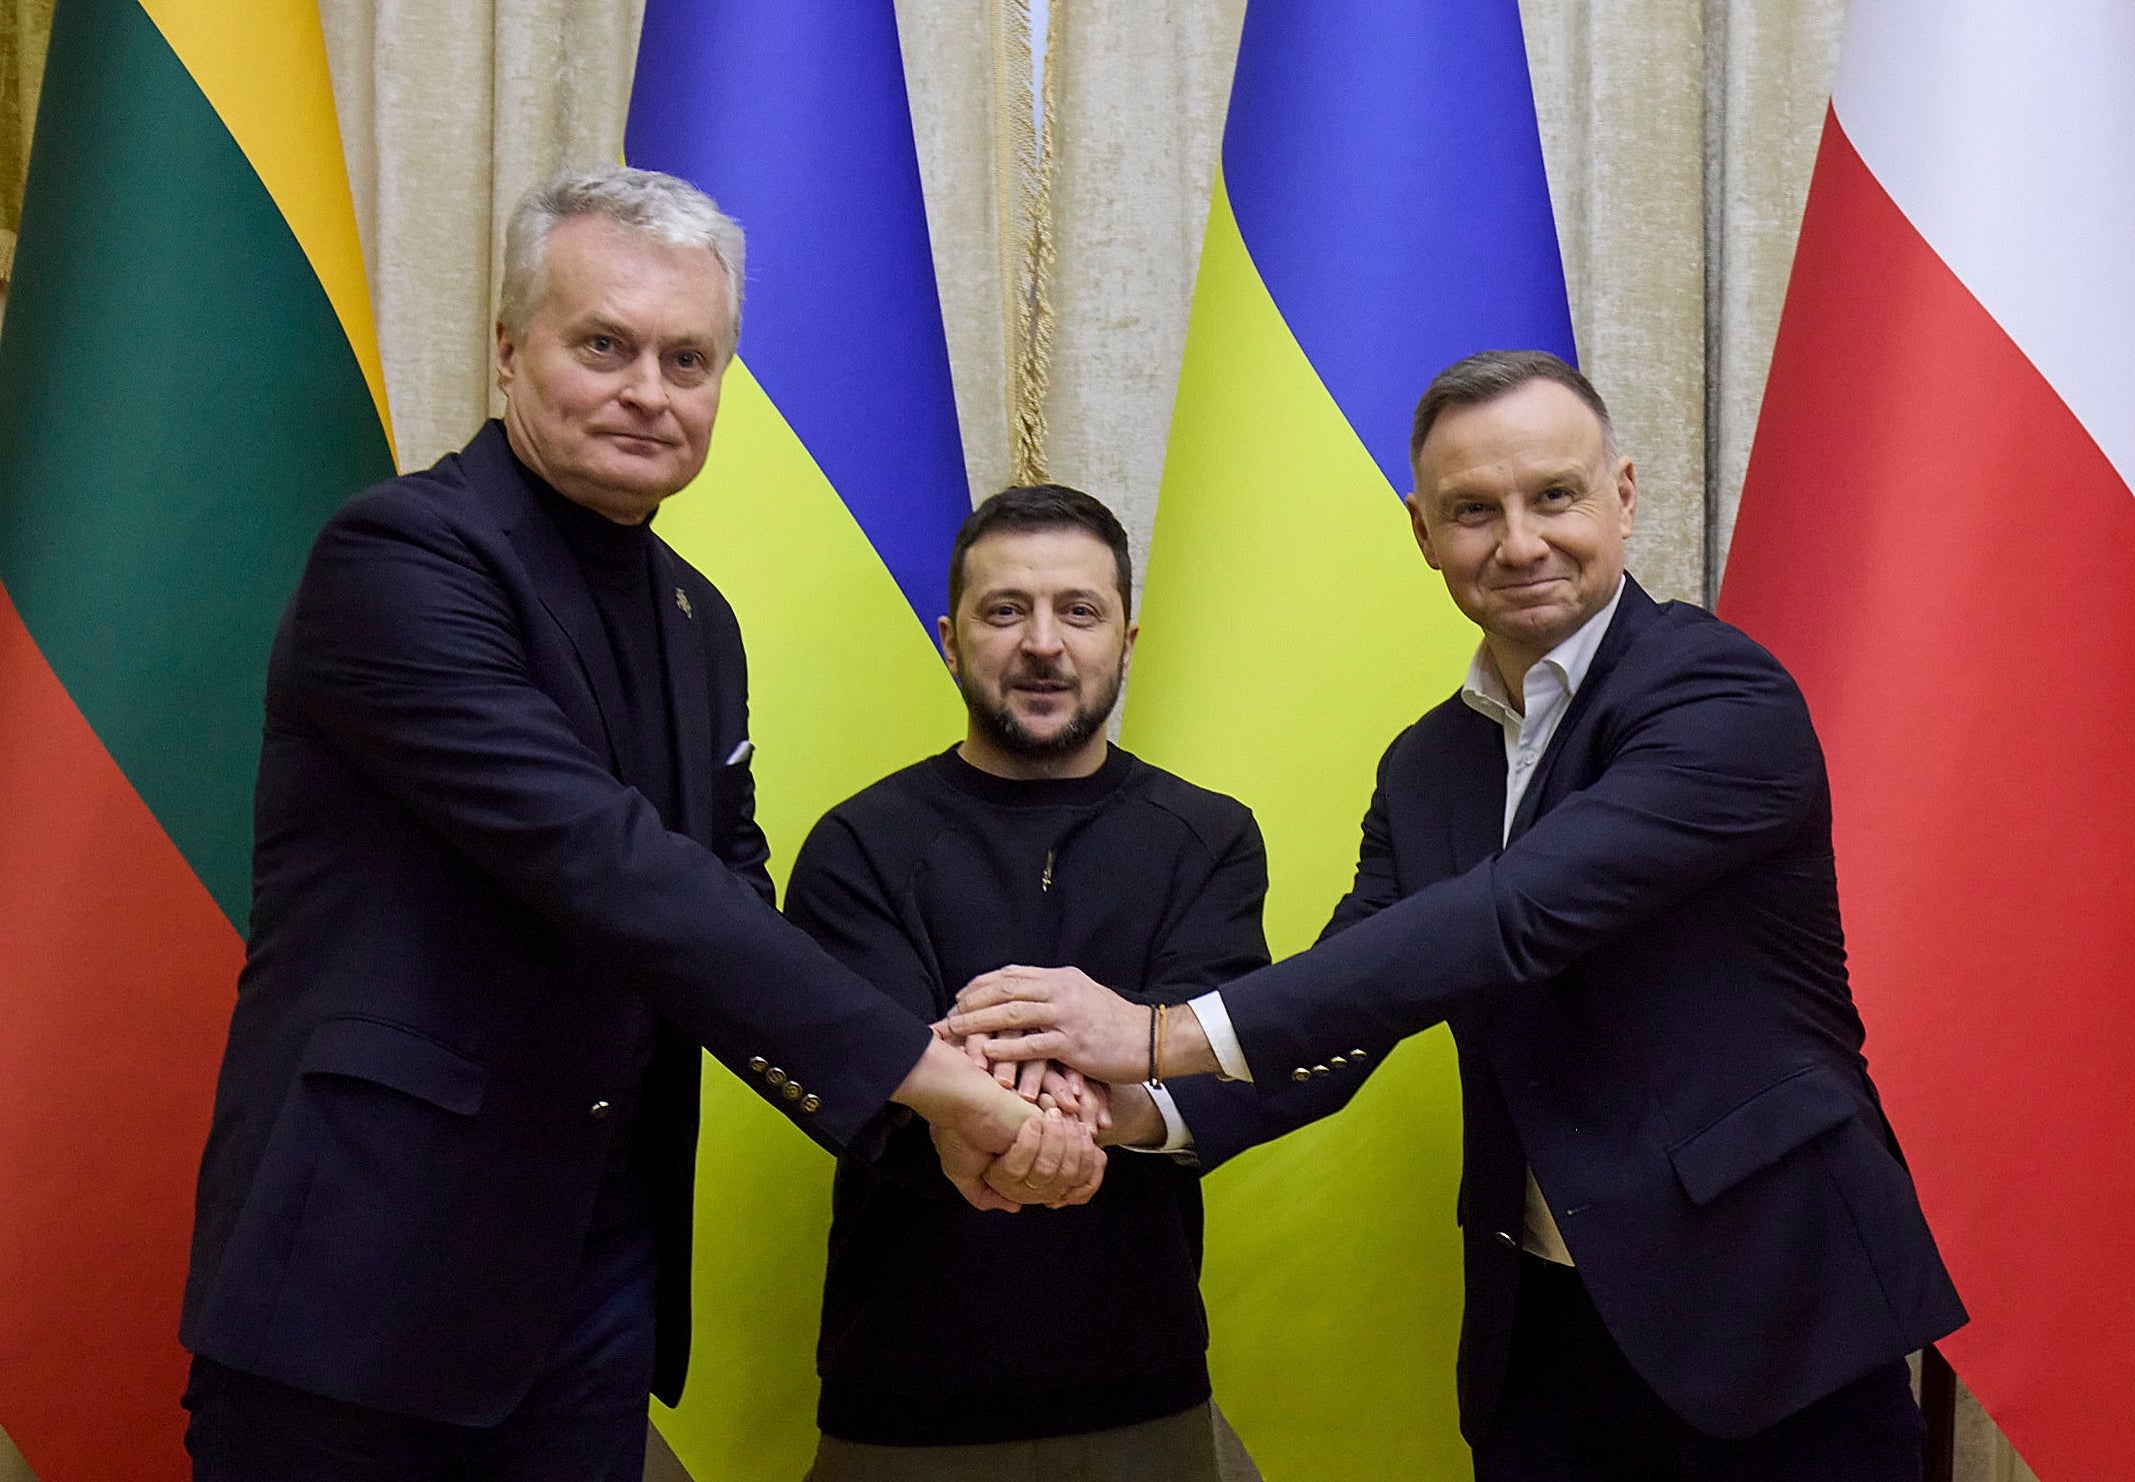 Left to right: Gitanas Nauseda, Volodomyr Zelensky and Andrzej Duda at a press conference in Lviv